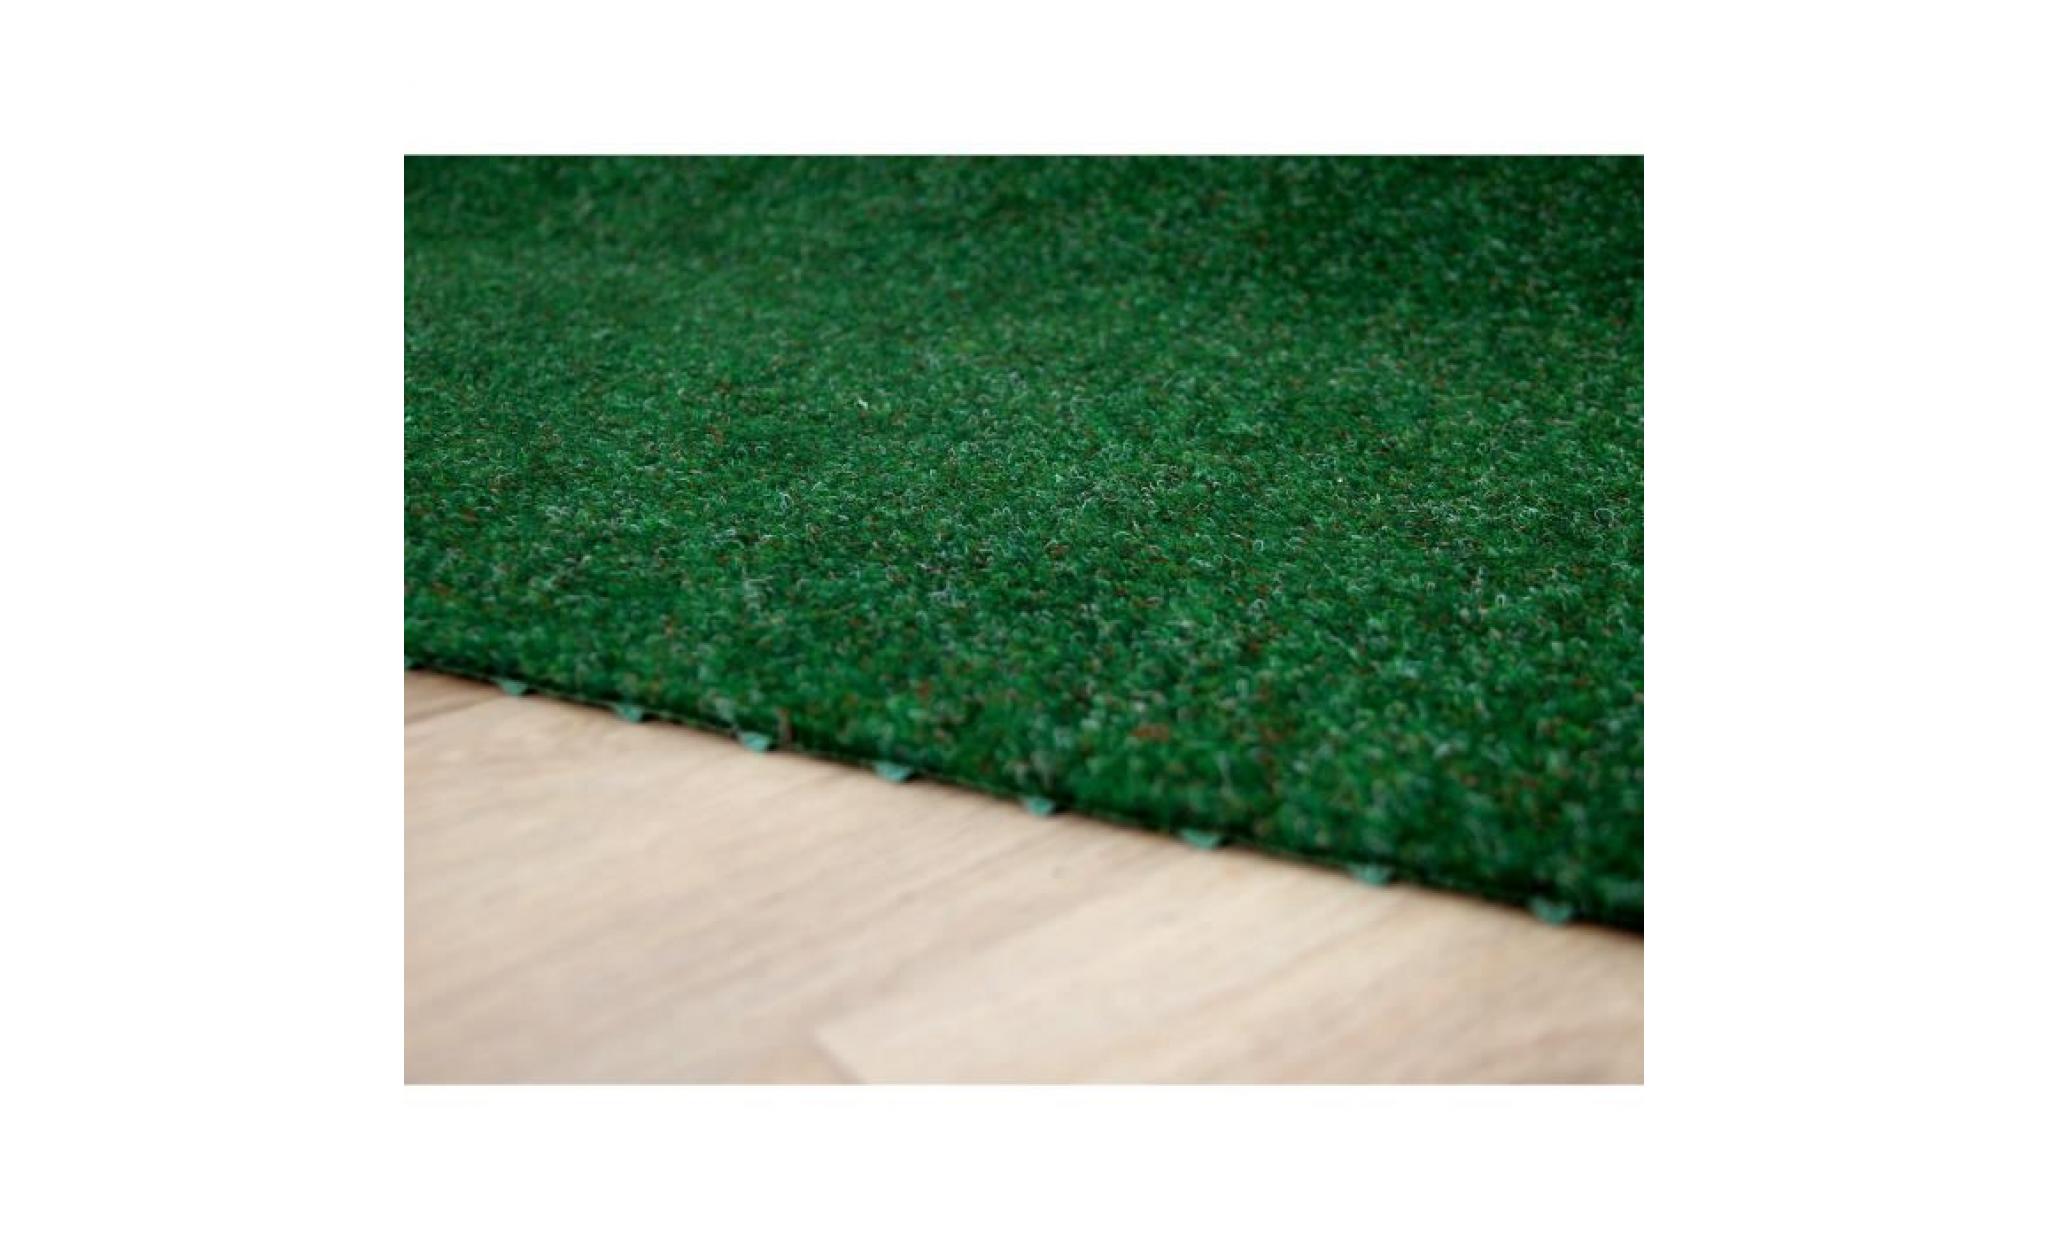 kingston   tapis type gazon artificiel – pour jardin, terrasse, balcon   beige [200x100 cm] pas cher